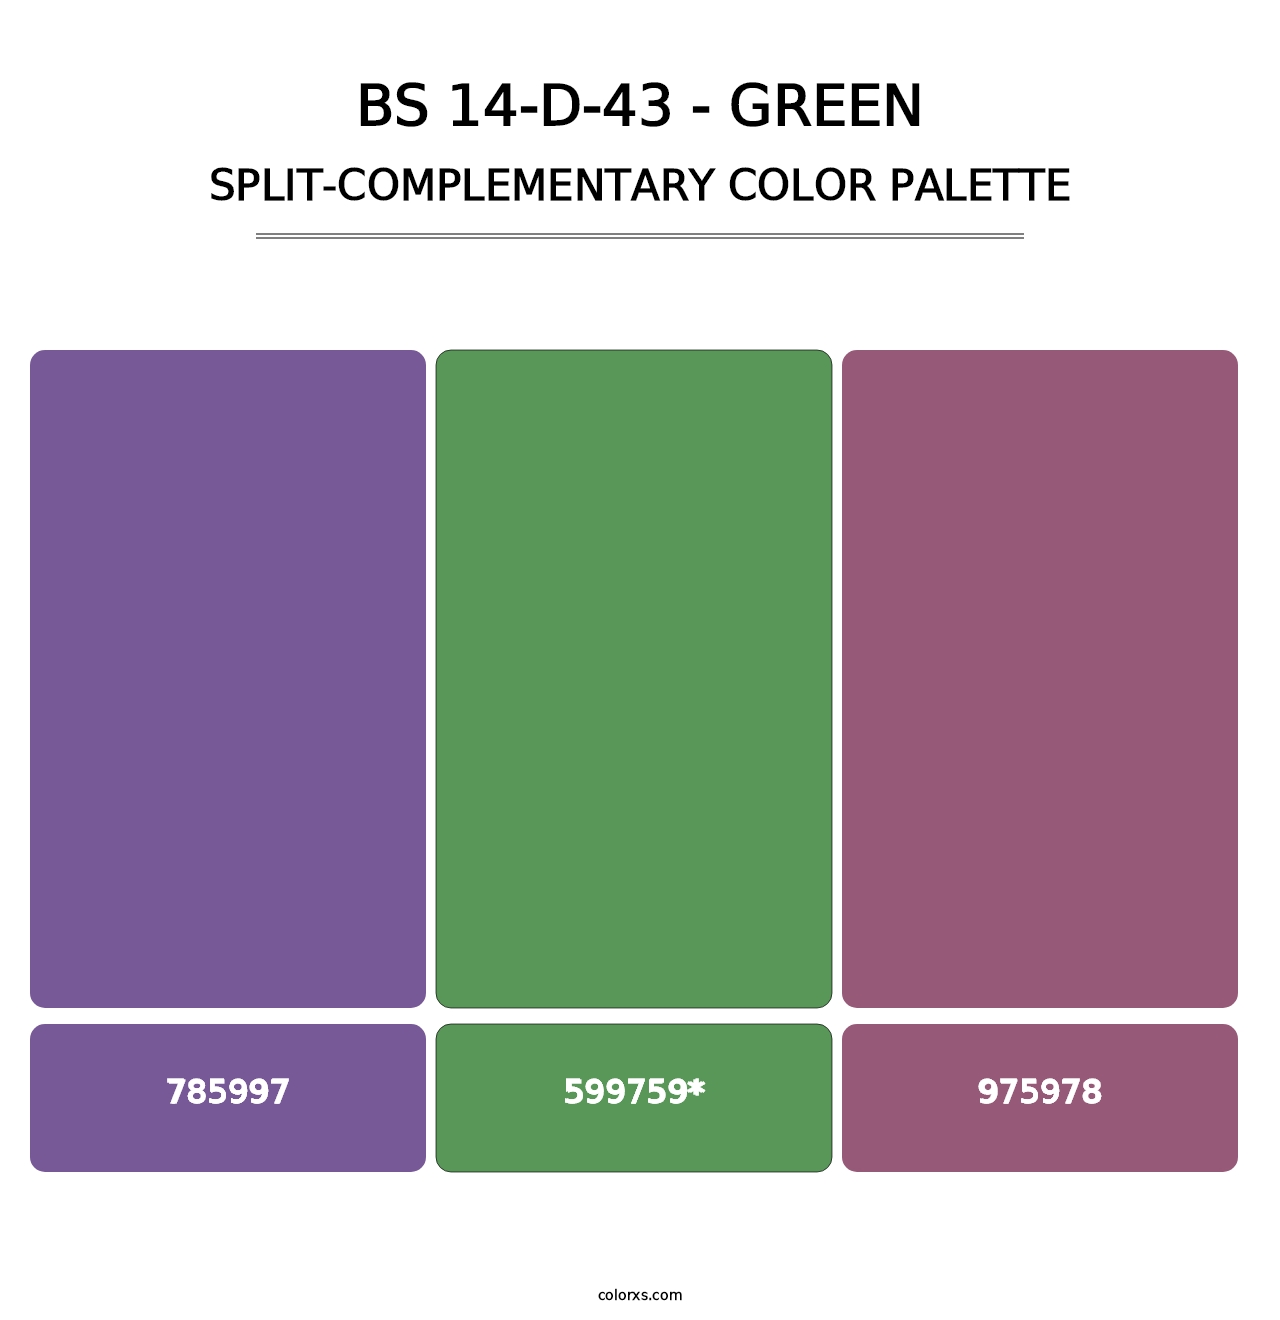 BS 14-D-43 - Green - Split-Complementary Color Palette